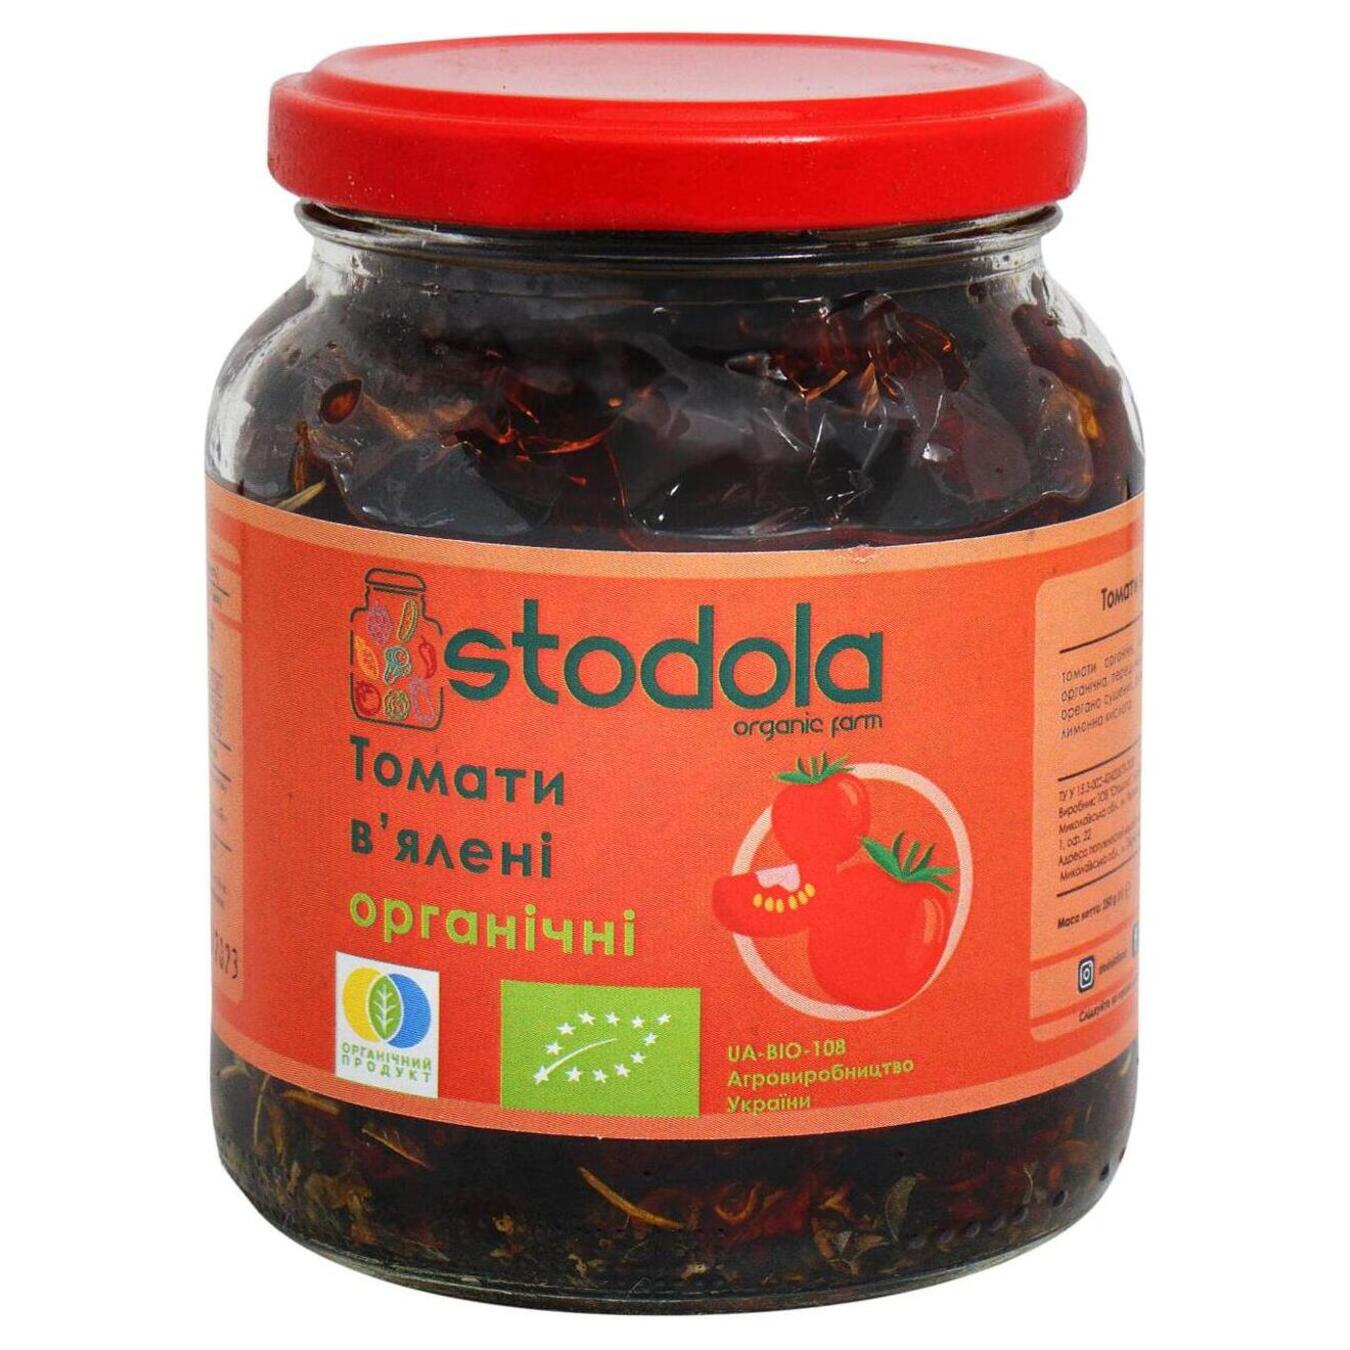 Tomatoes Stodola Shchyra Food dried organic 250g